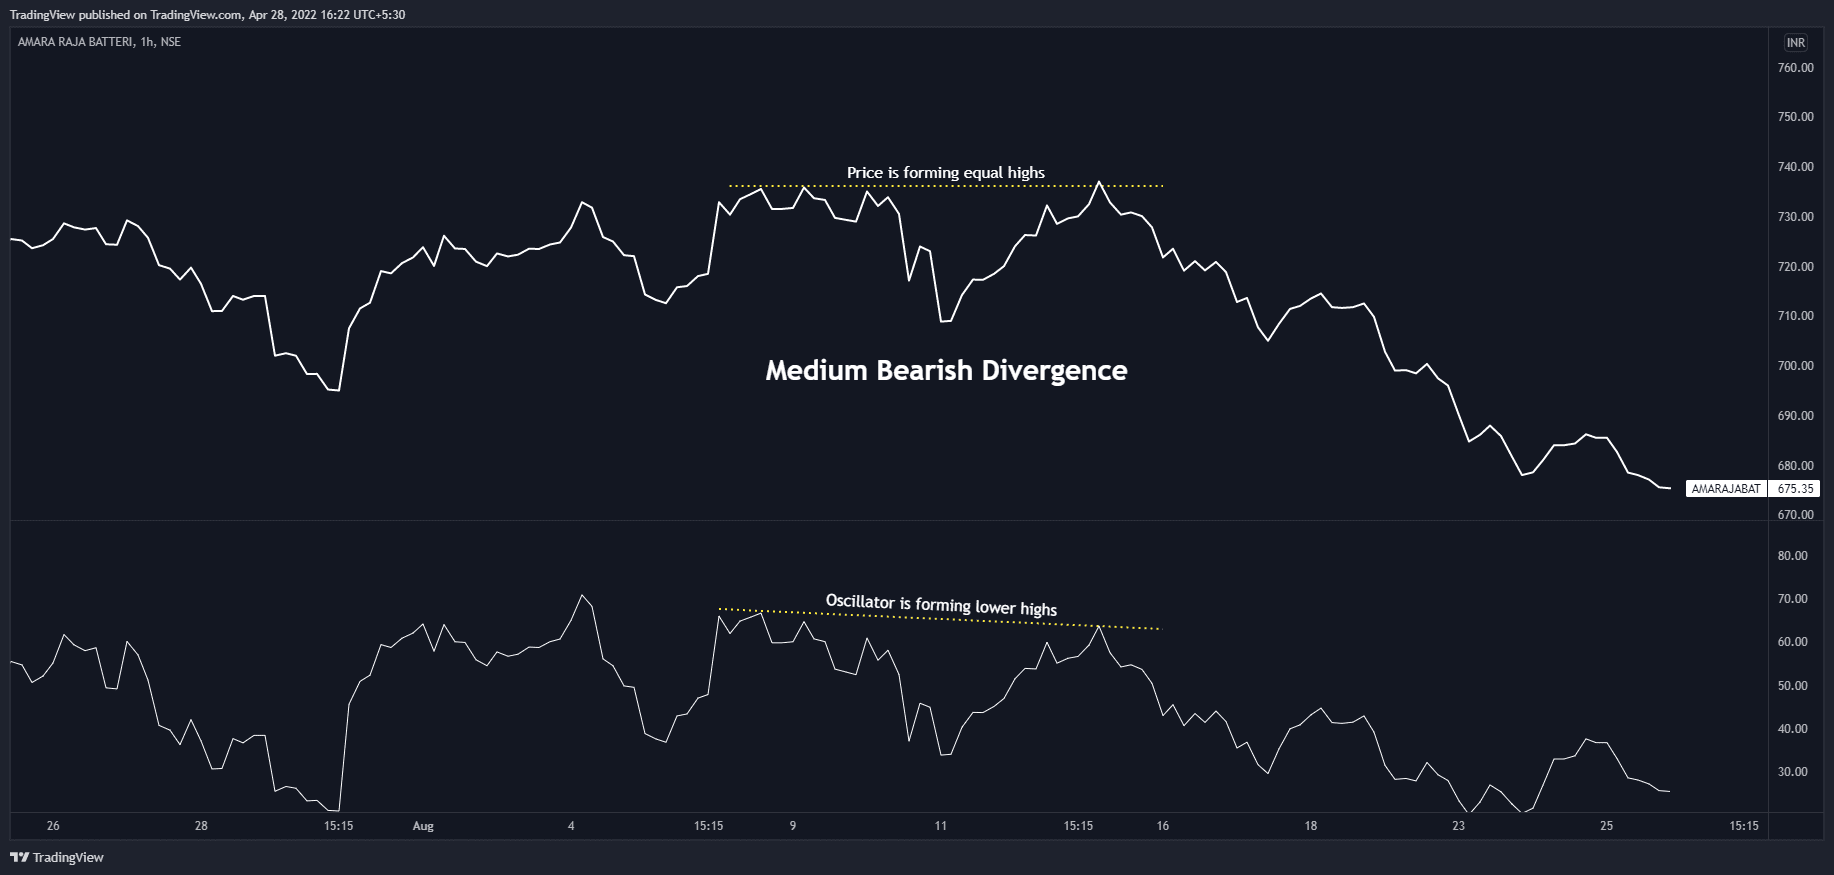 Medium Bearish Divergence